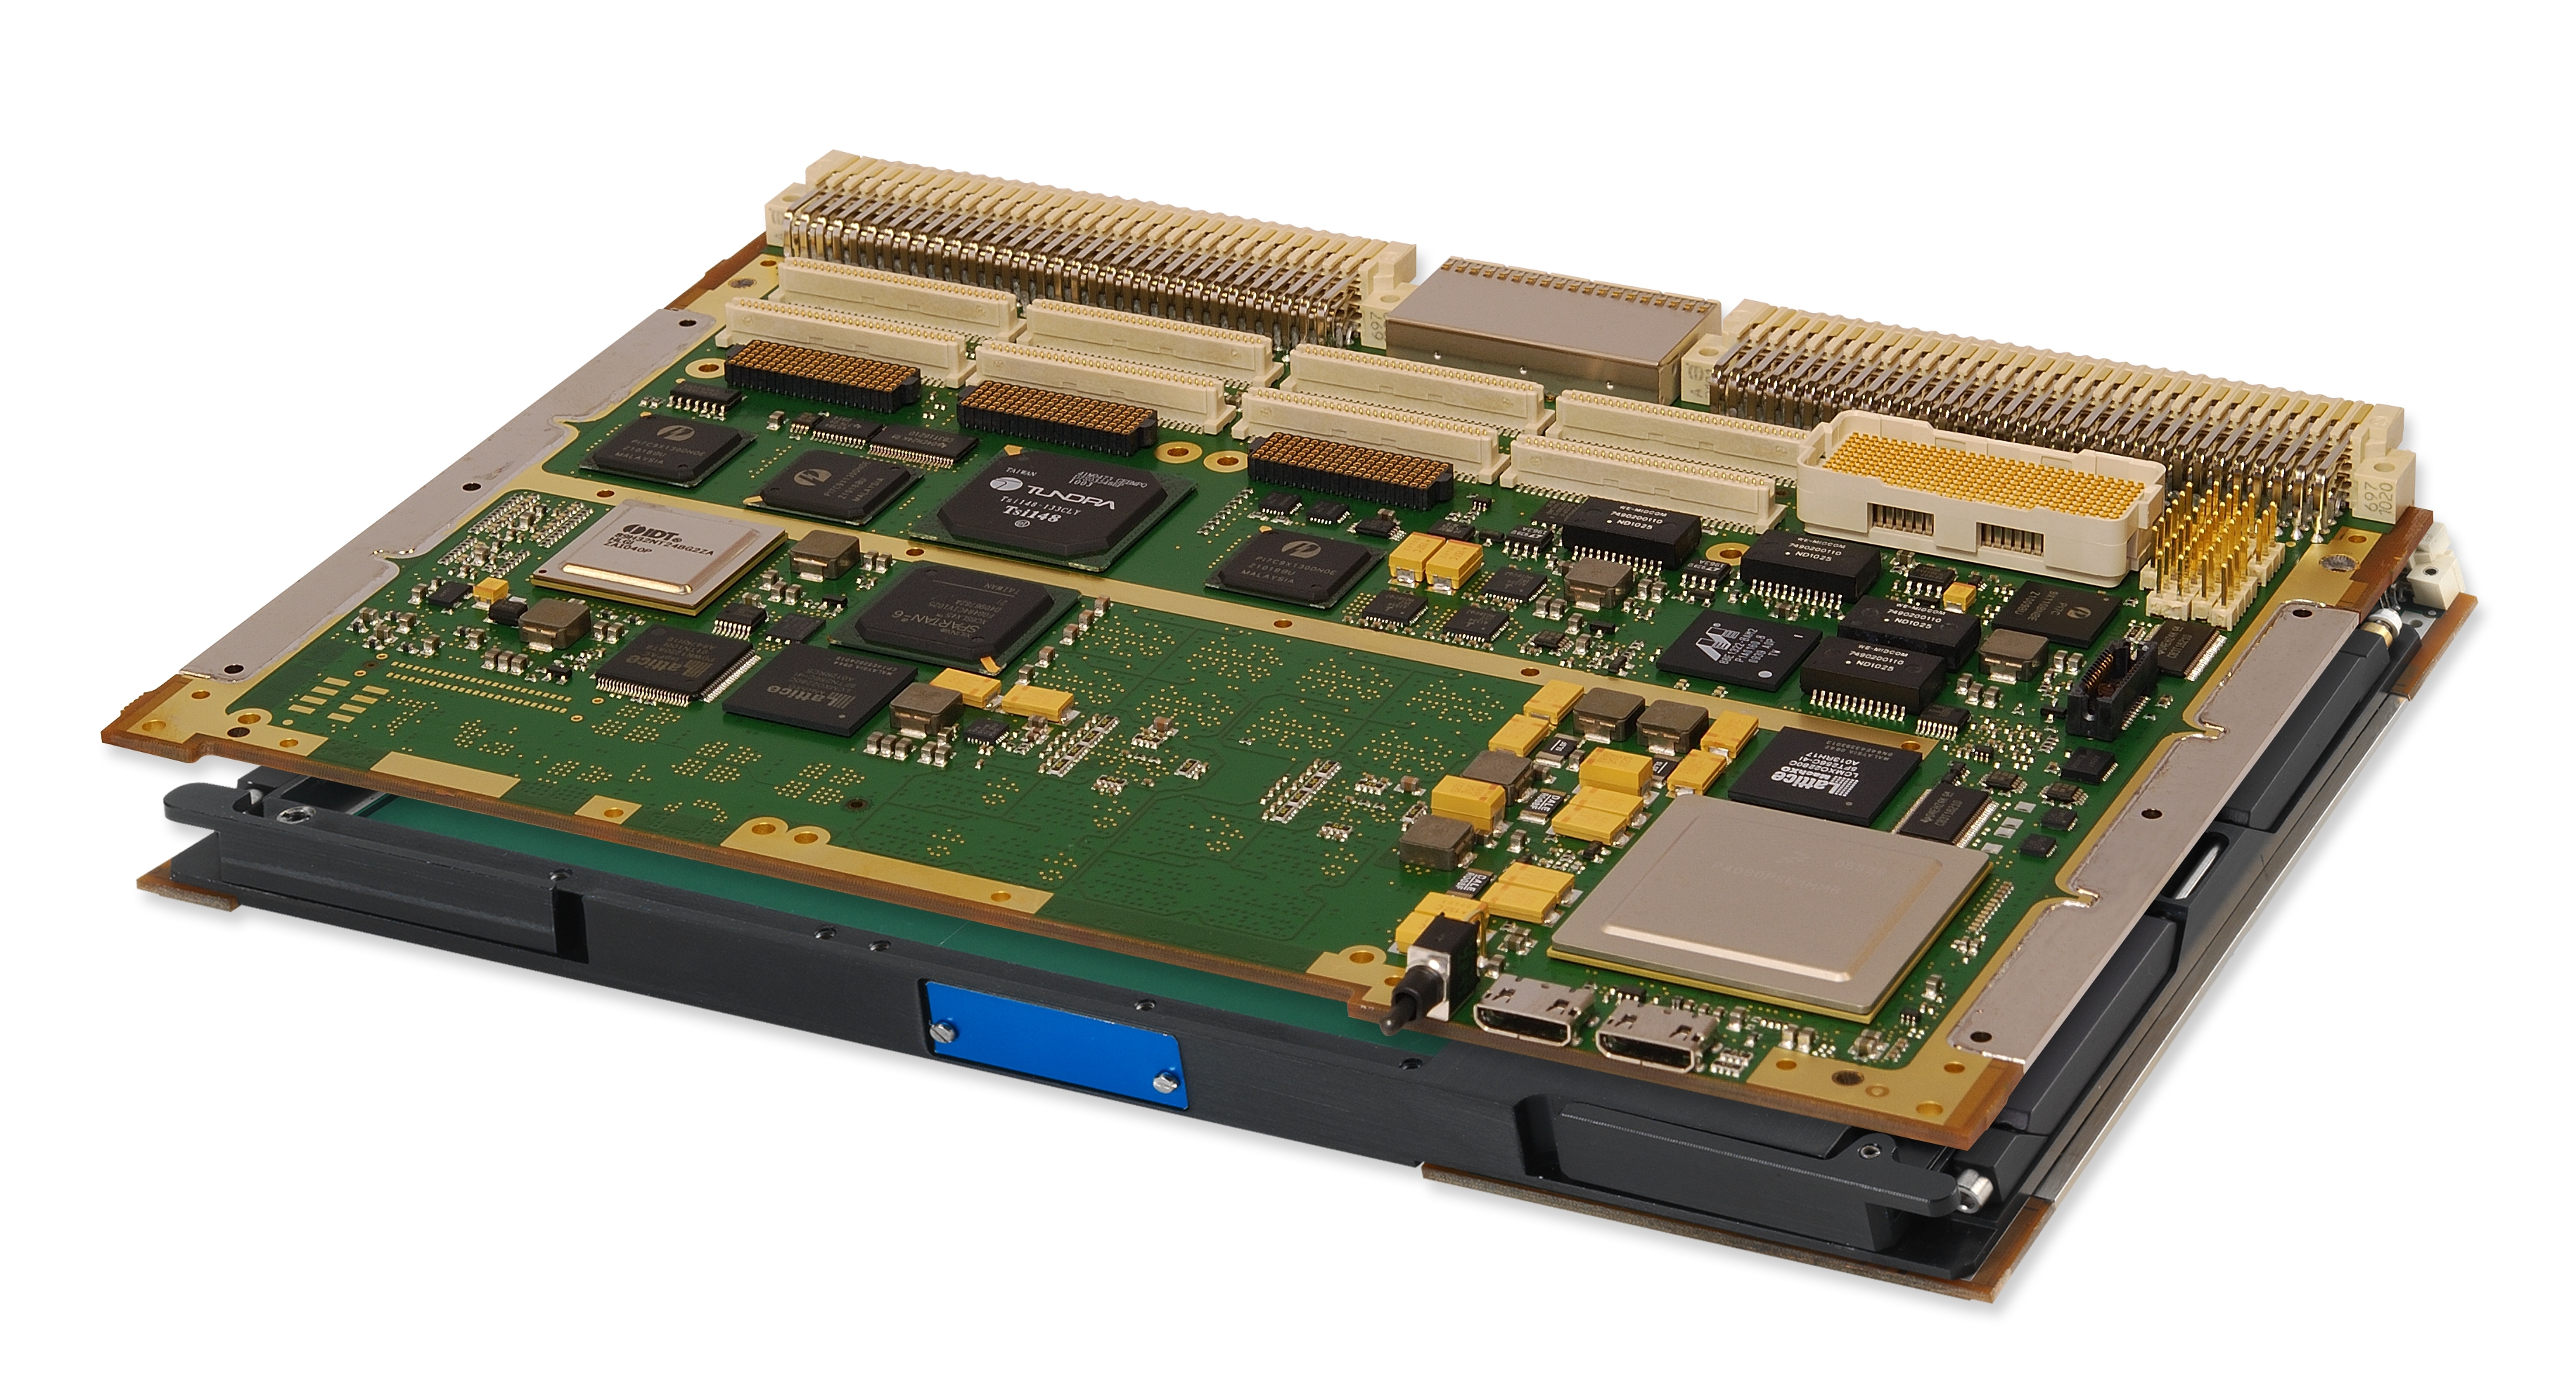 Abaco Systems' PPC10A 6U VME single board computer